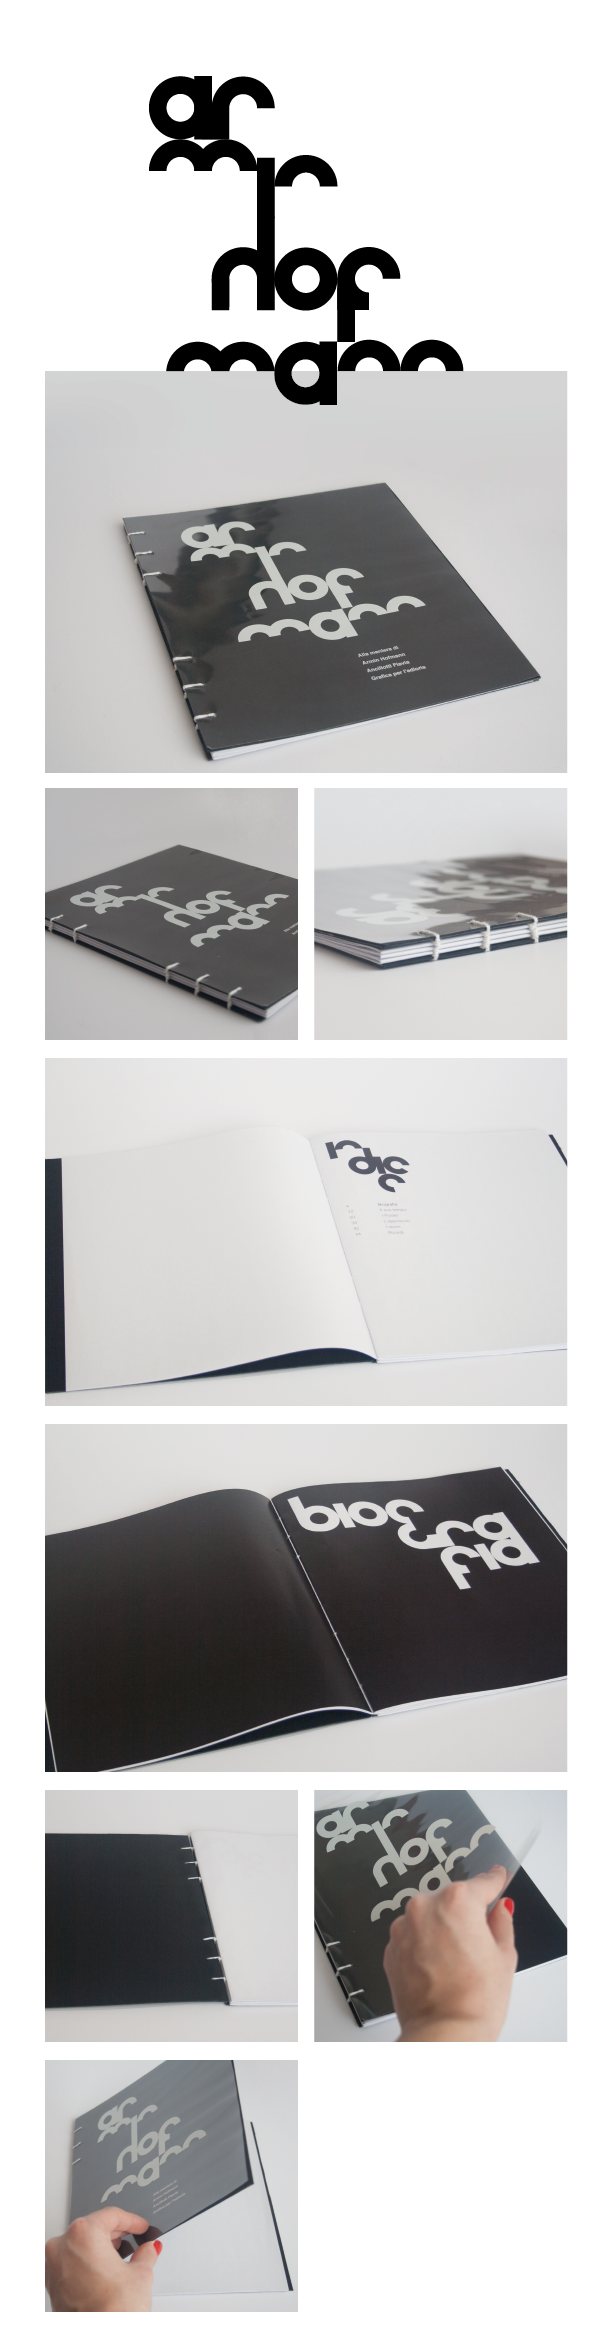 book Monograph Armin Hofmann book design grid binding Coptic stitch binding swiss design Hand Bound pantone